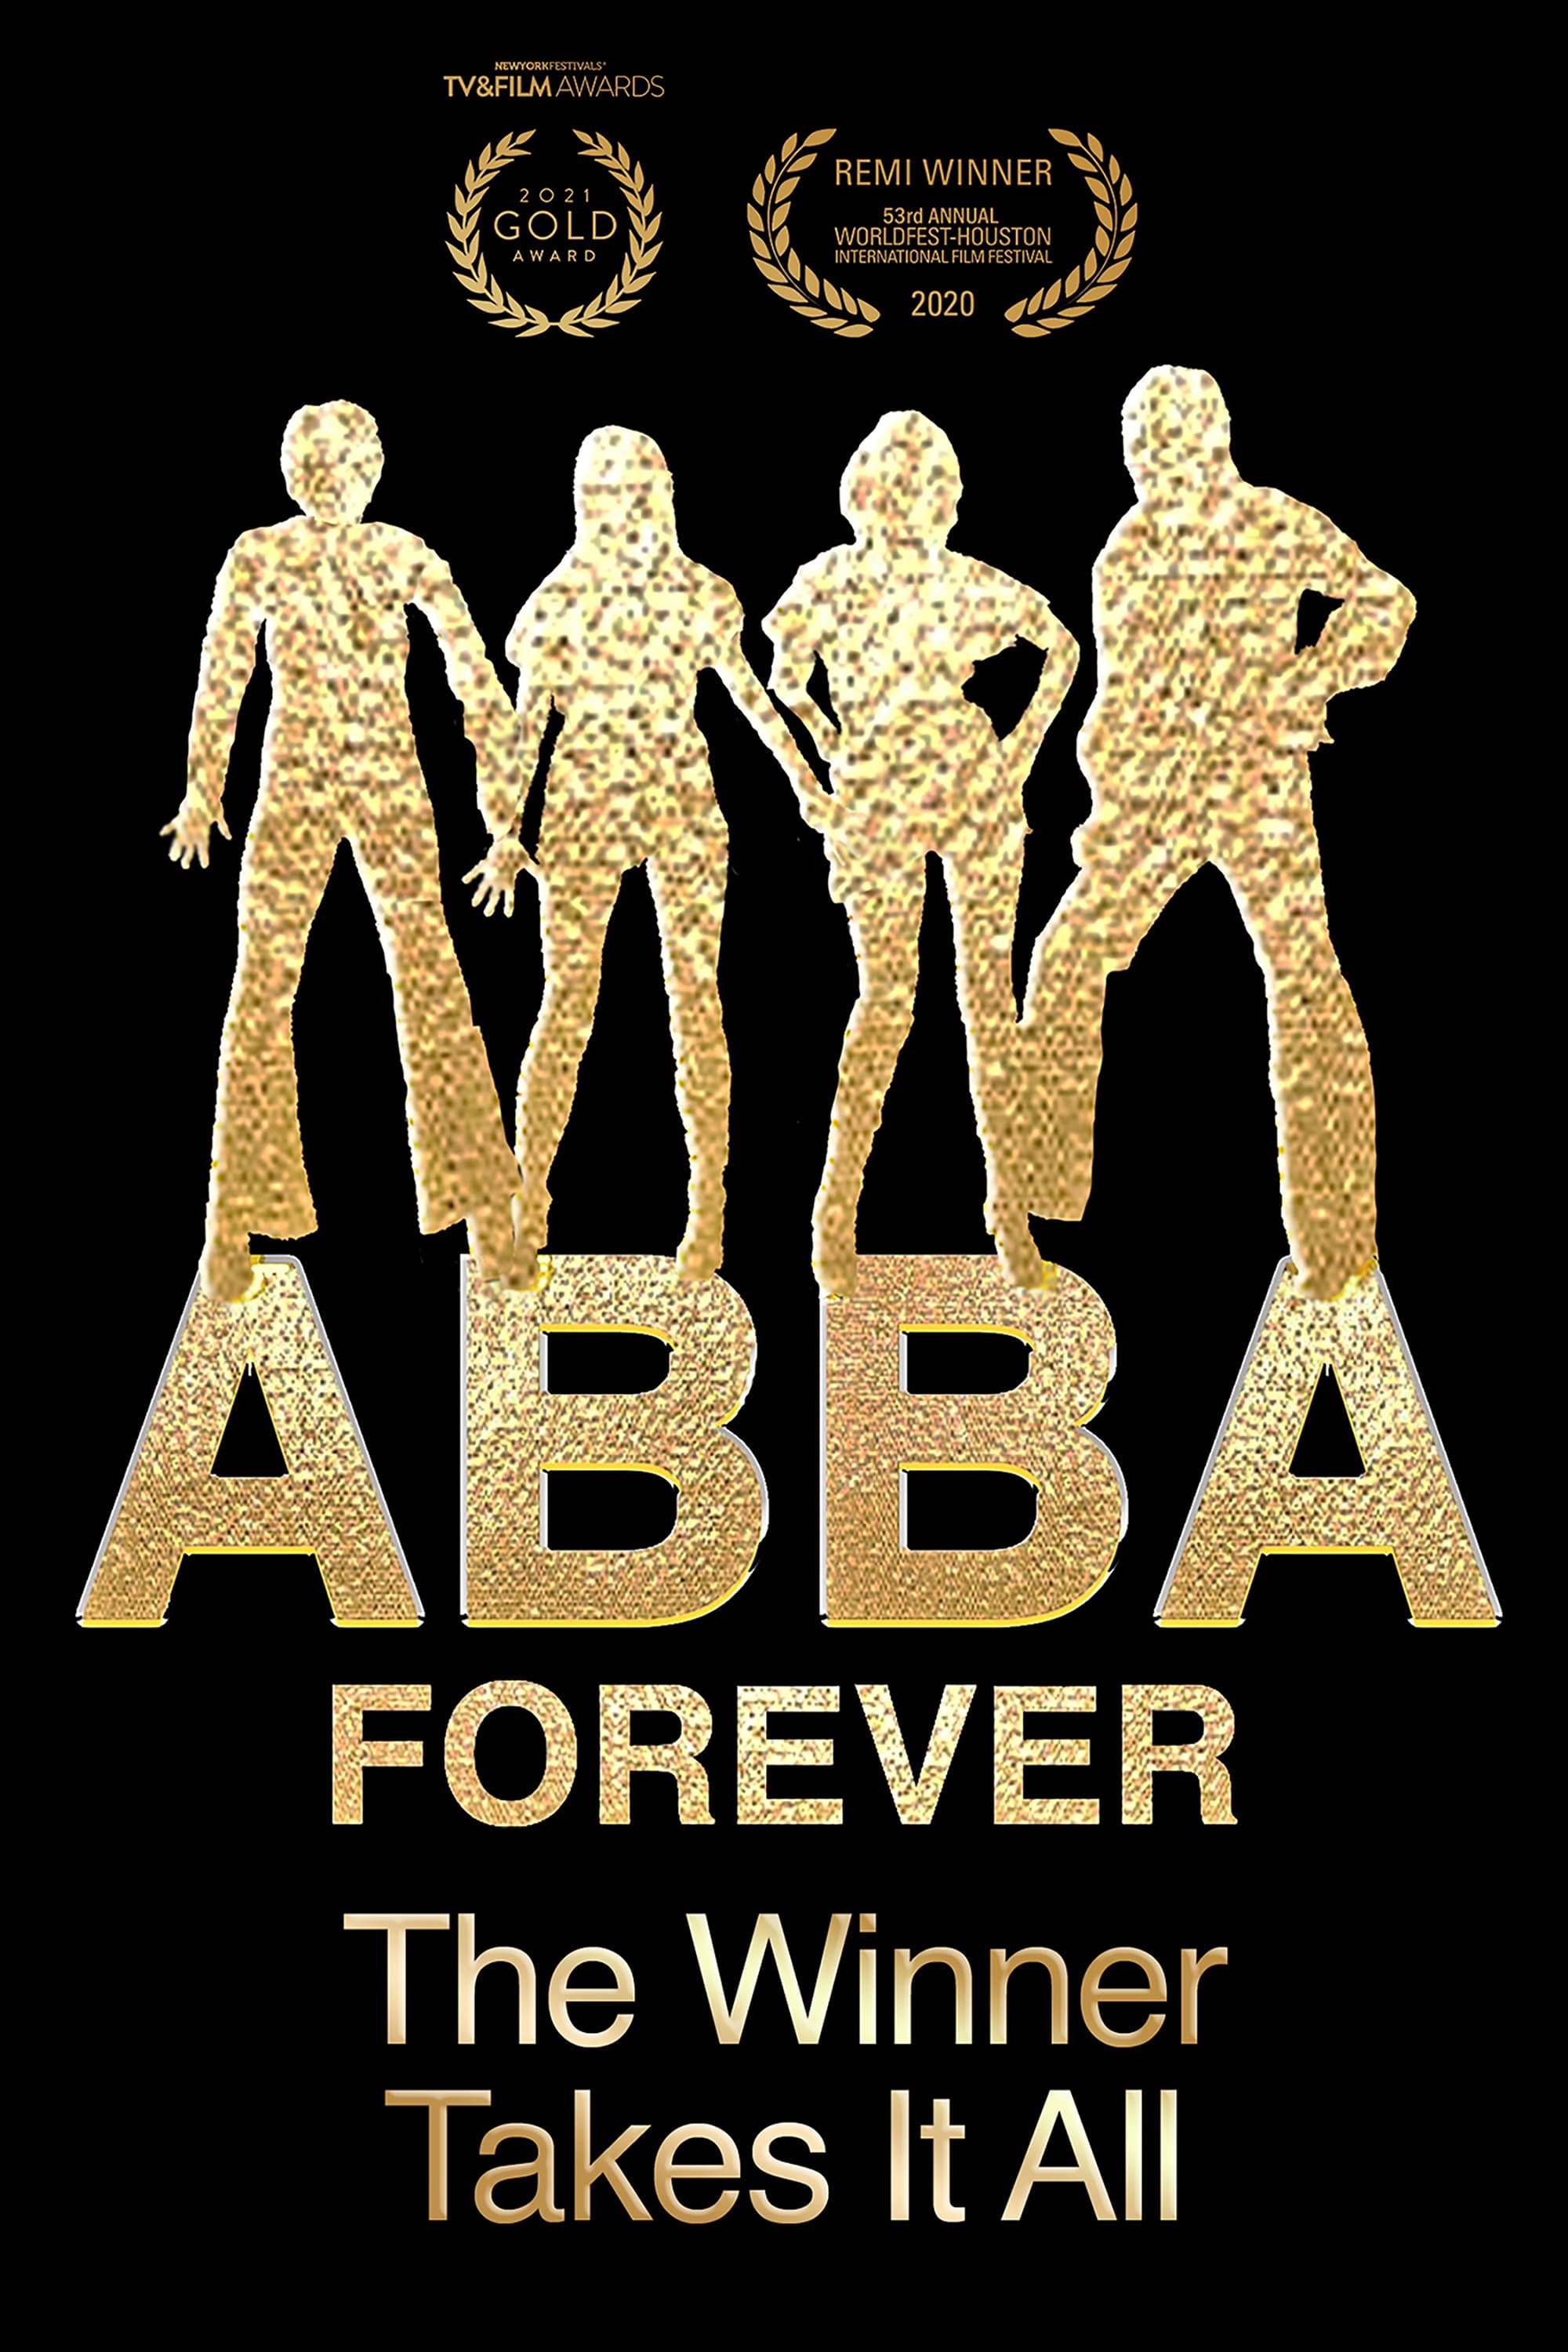 ABBA Forever: A Celebration (2019)